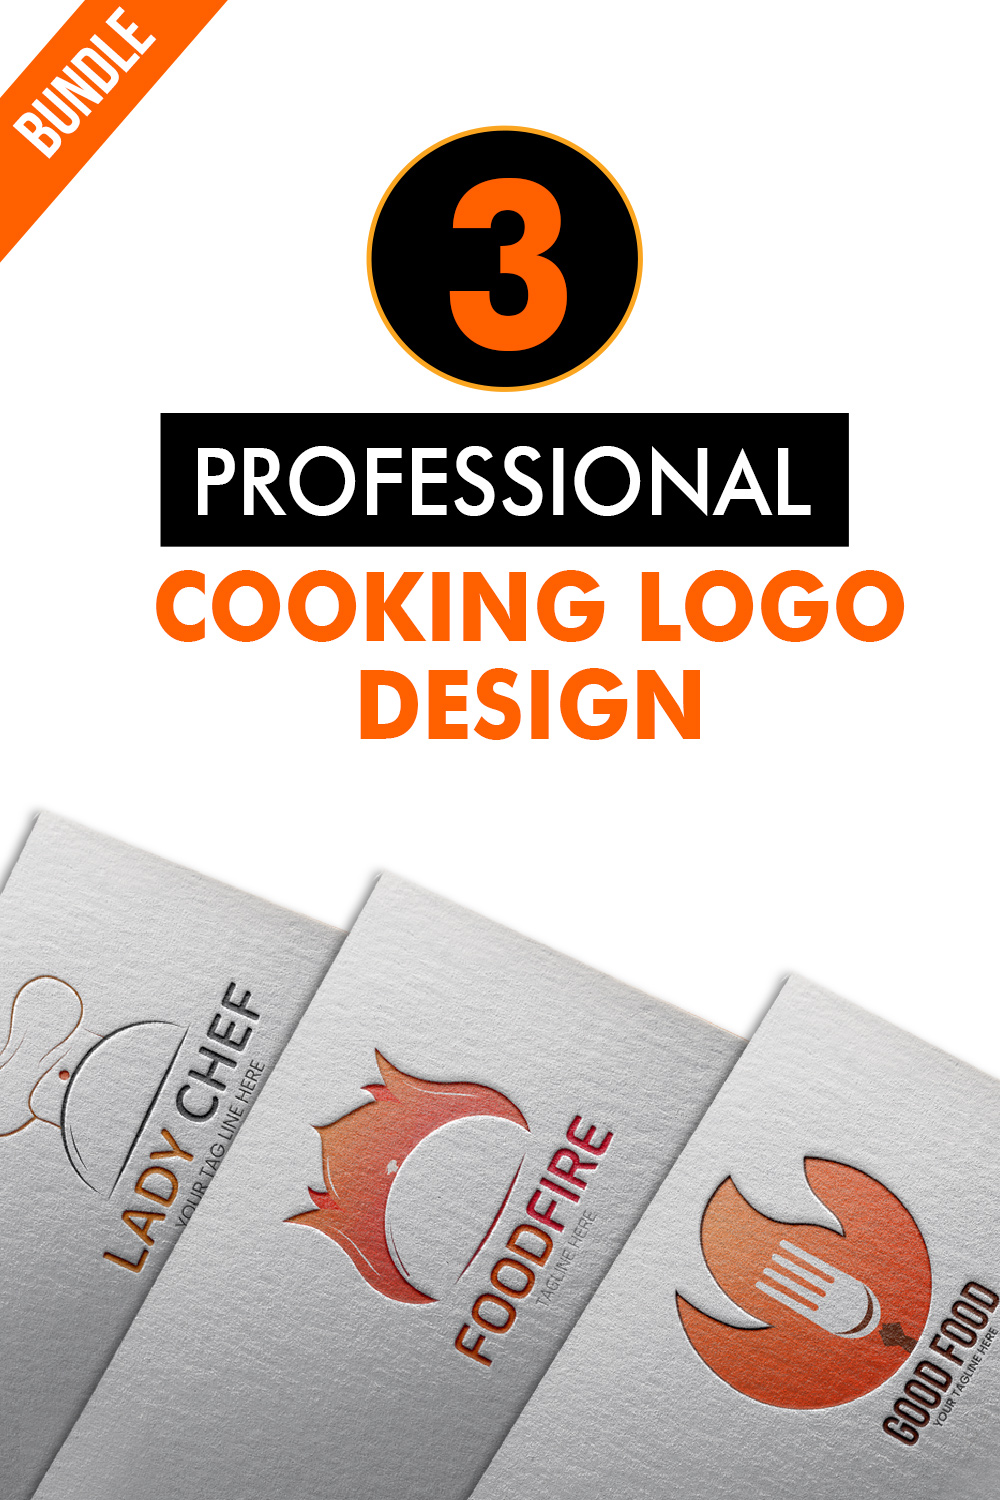 3 Cooking Logo Design bundle 8$ pinterest preview image.